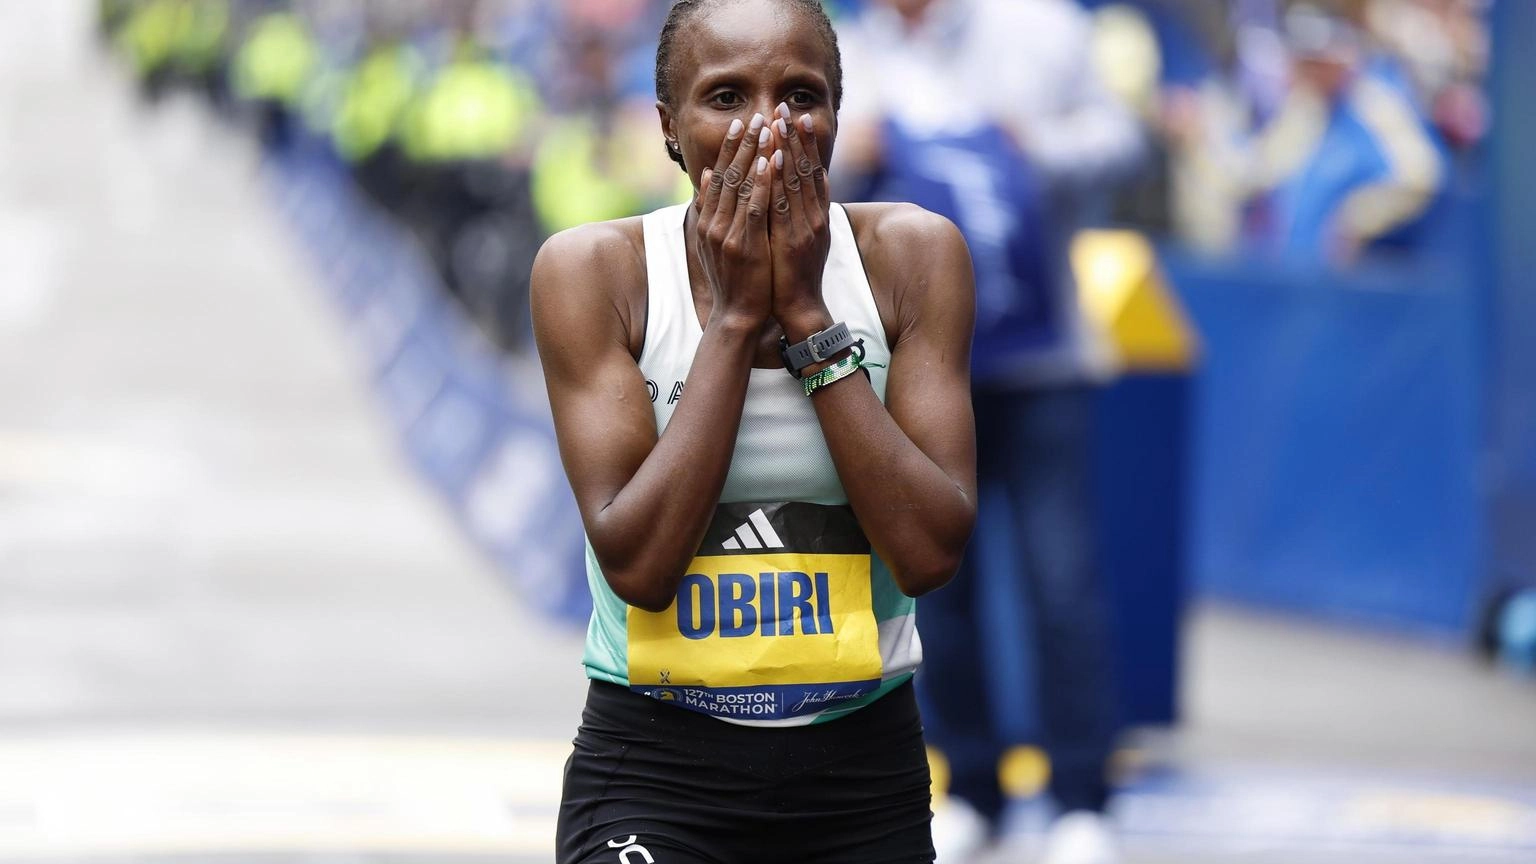 Atletica: keniana Obiri vince Maratona di New York donne